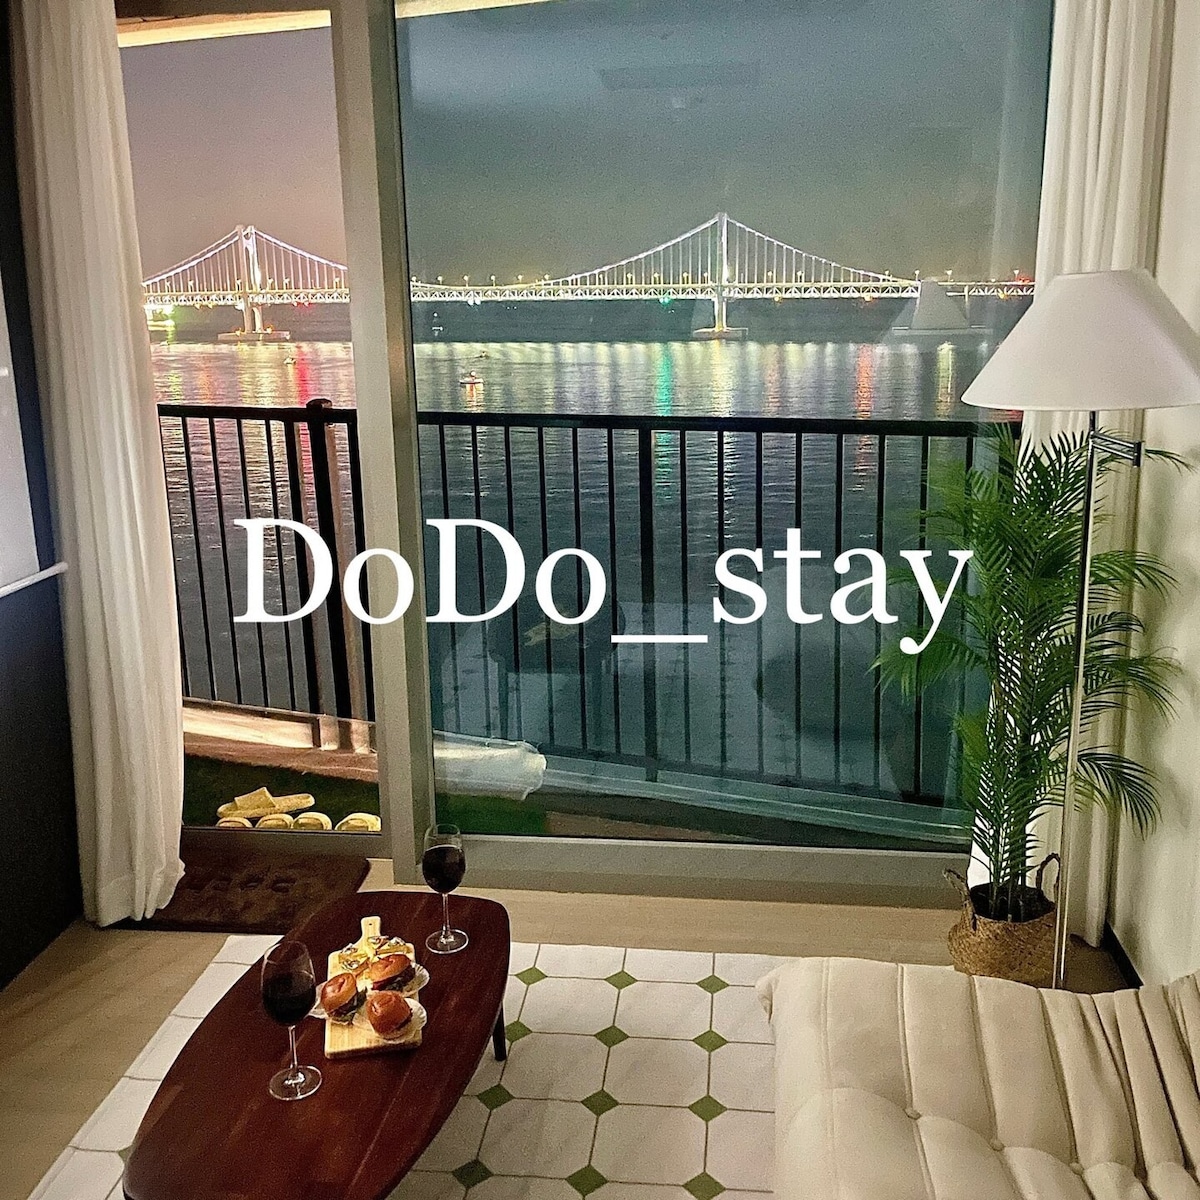 DoDo_stay #广安大桥高层海景# Instagram感官#广安里海滩1秒#照片餐厅# Netflix #波浪#茶叶